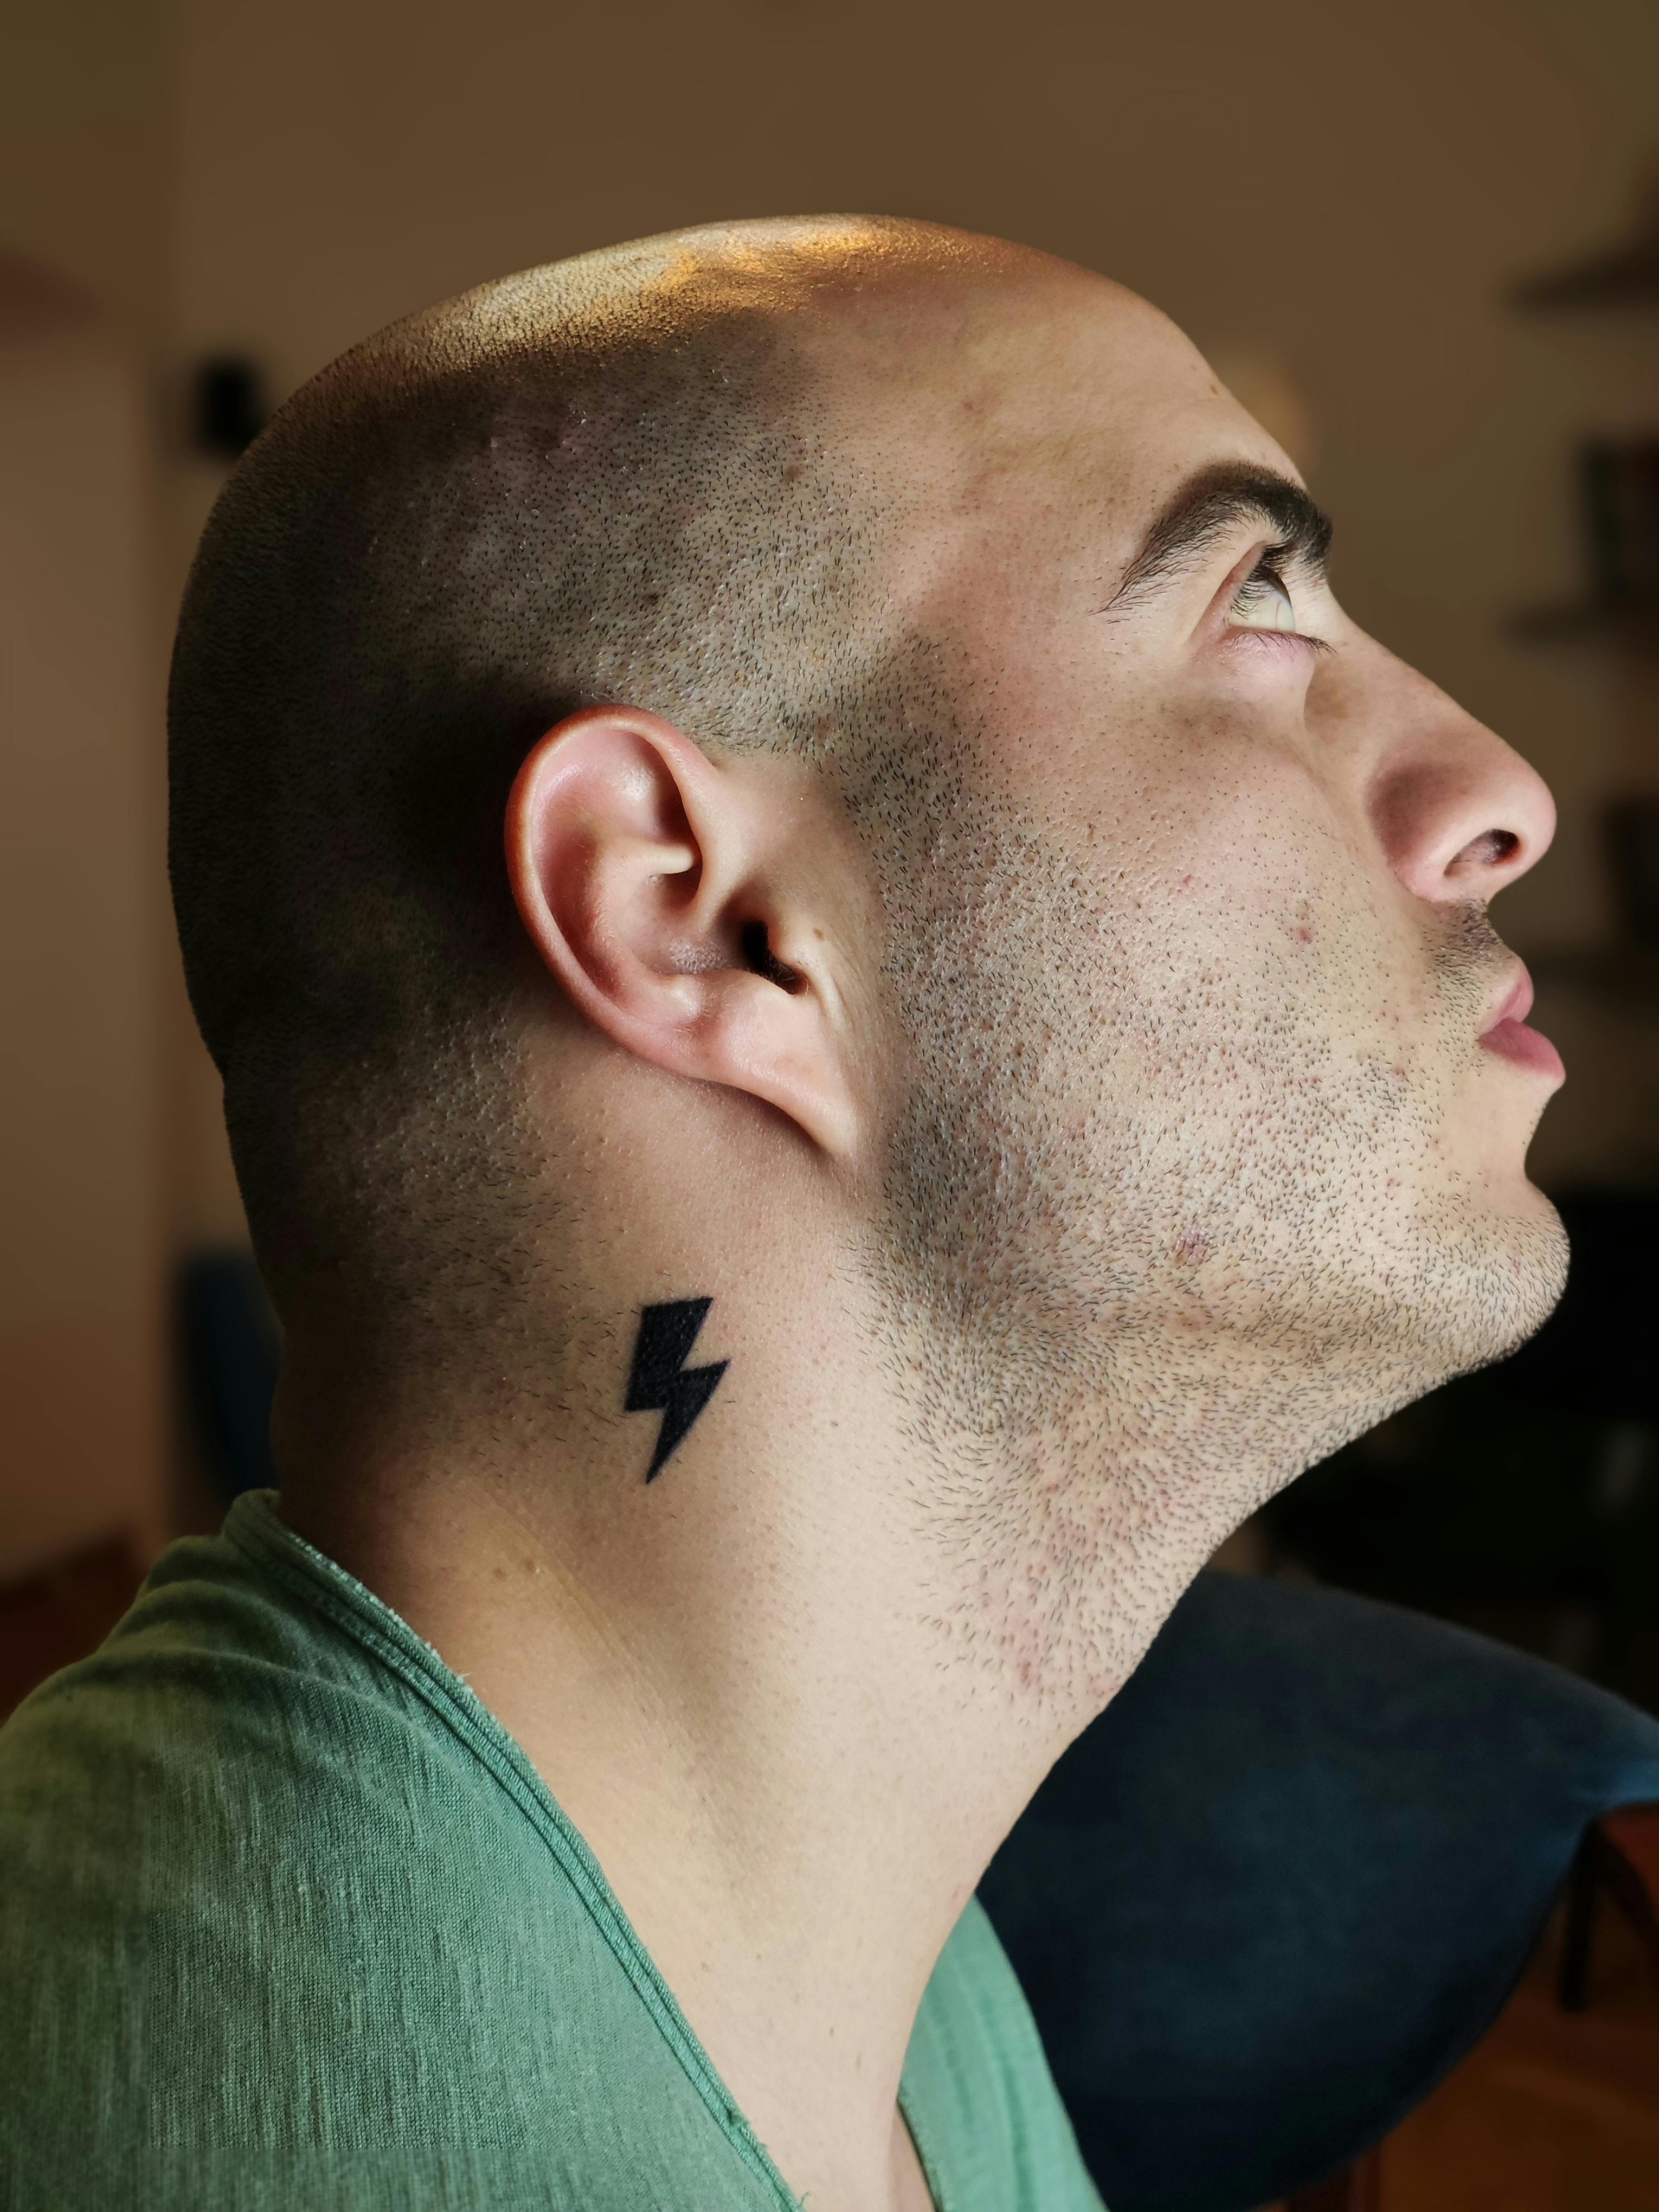 Lightning Bolt Tattoos: Meanings and Designs - nenuno creative